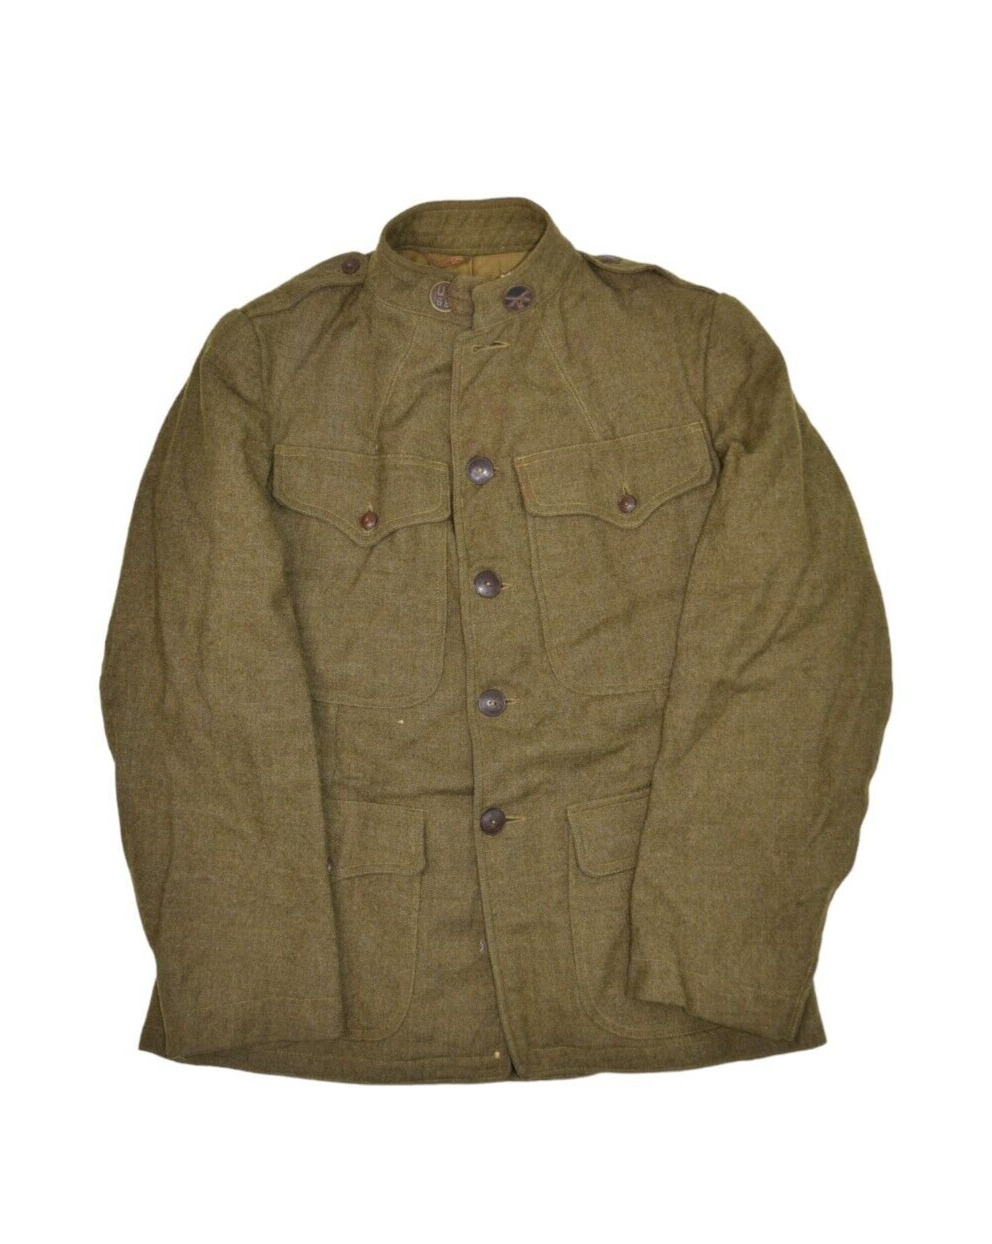 Vintage WWI Jacket Mens S AEF Wool Military Goldman 1918 World War 1 Infantry